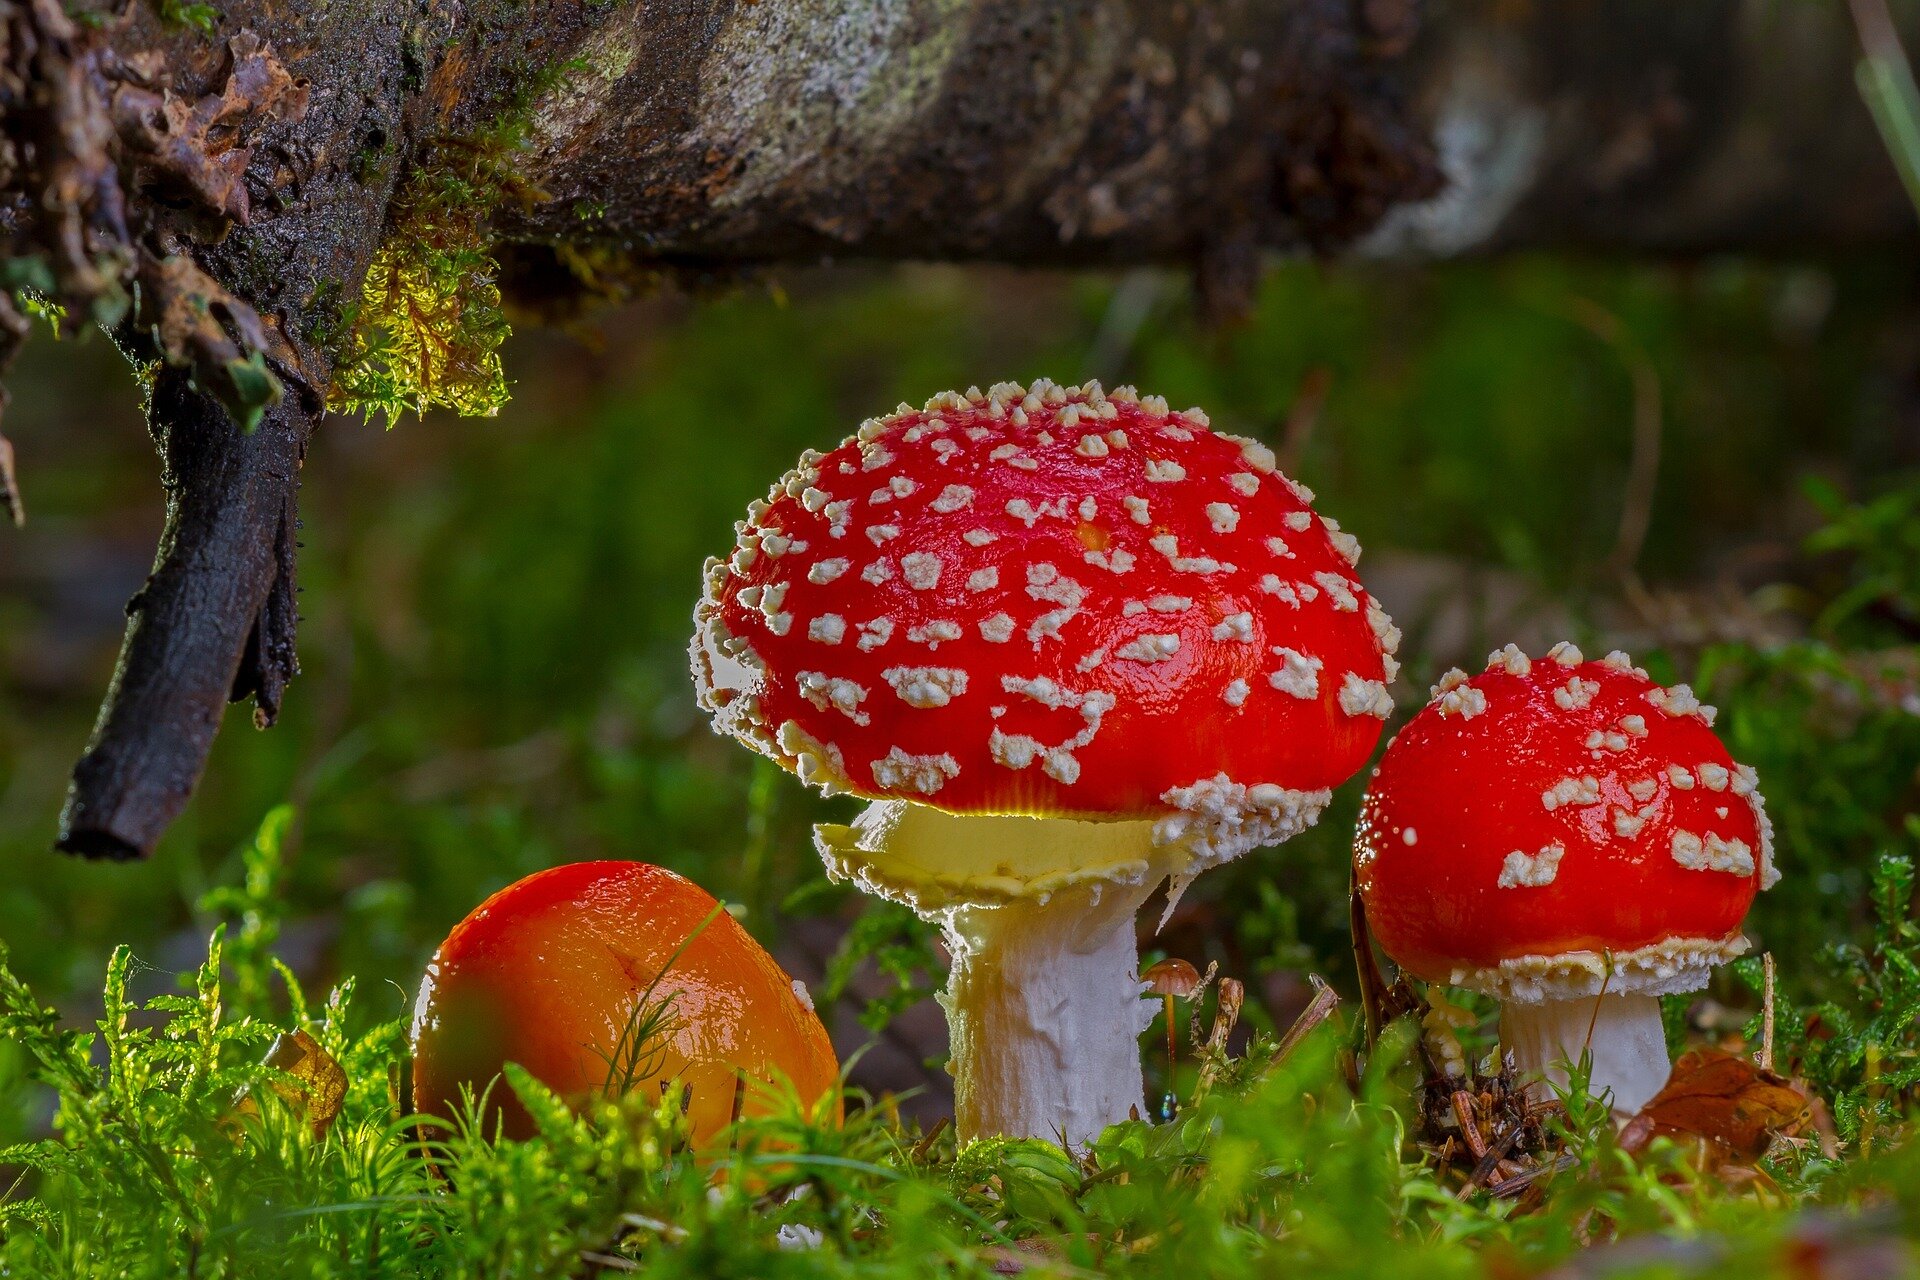 Mushrooms as Nature's Medicine Cabinet in Treating Diseases